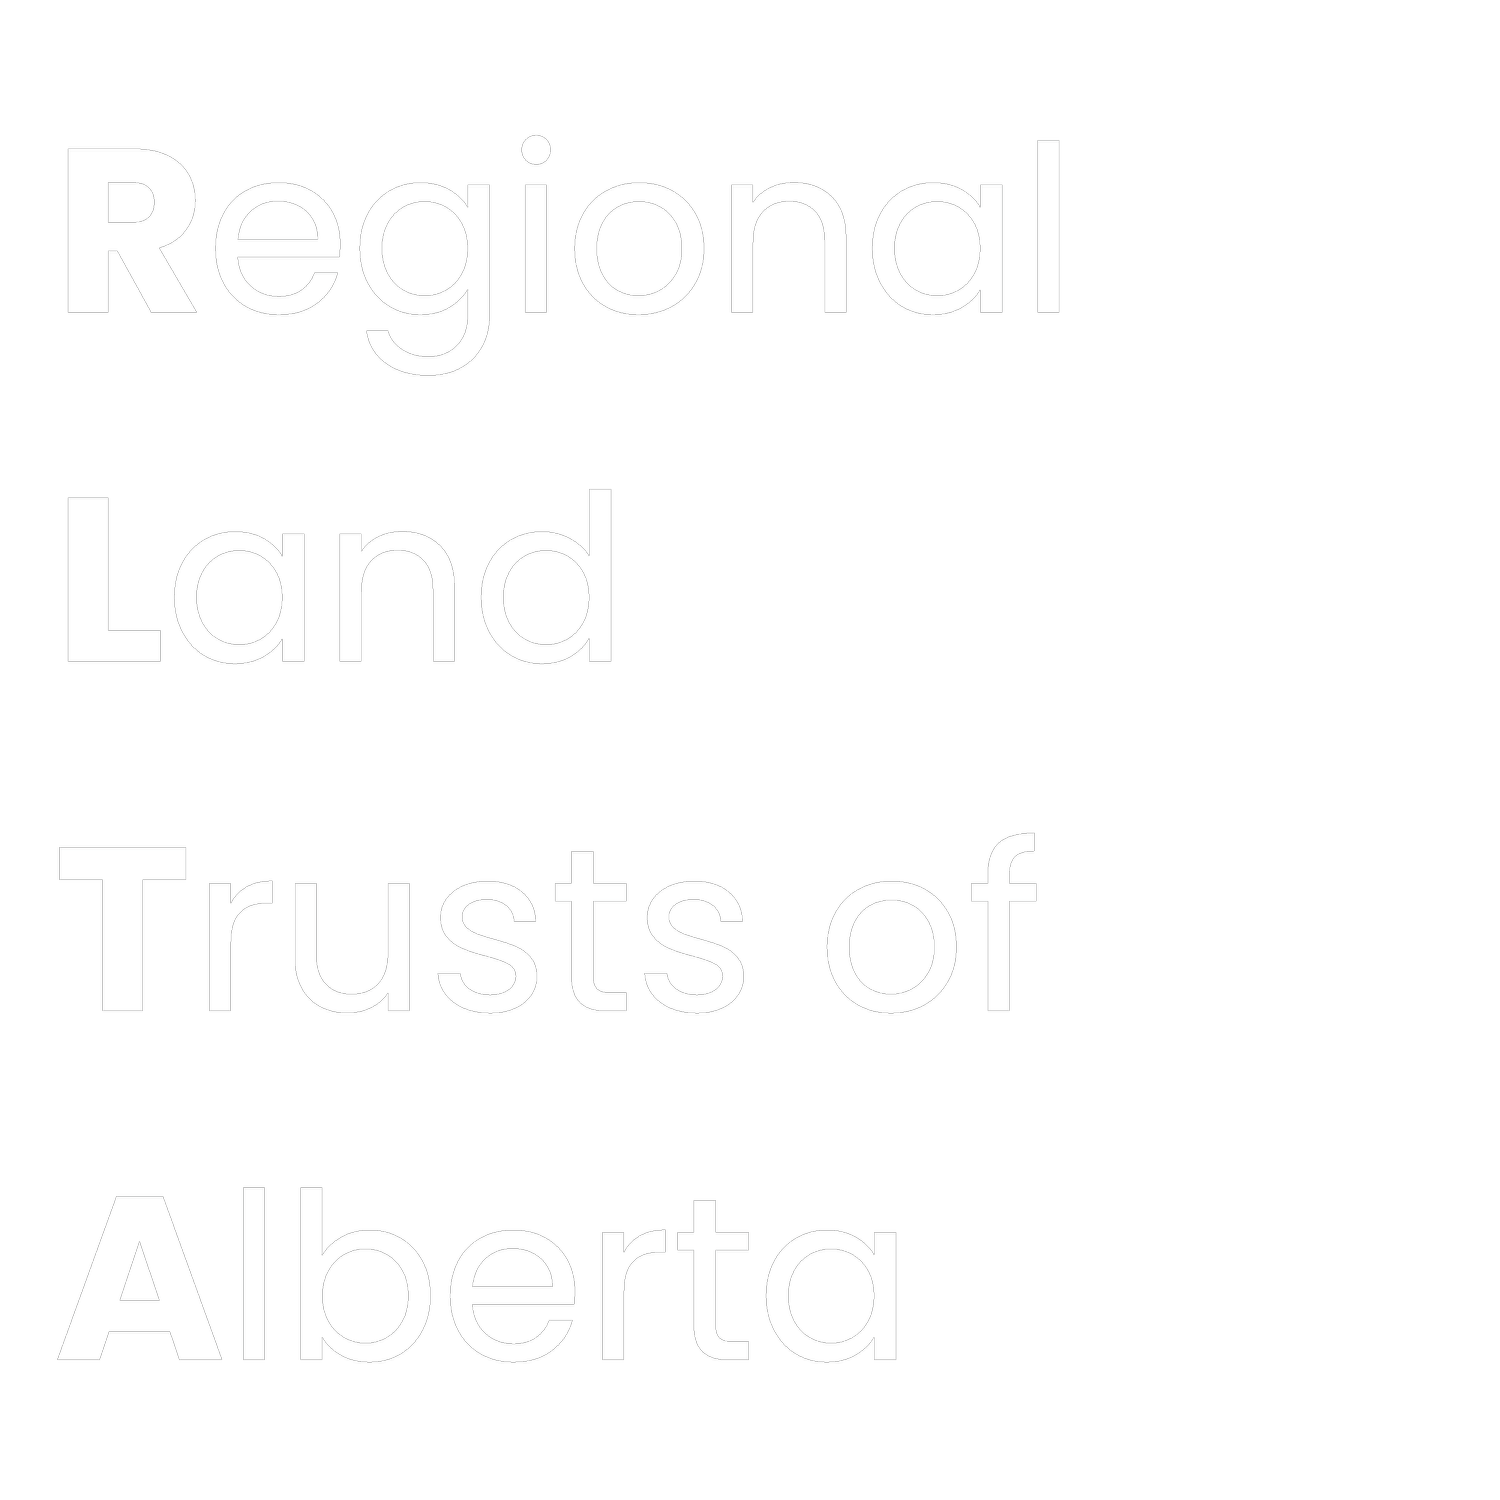 Regional Land Trusts of Alberta